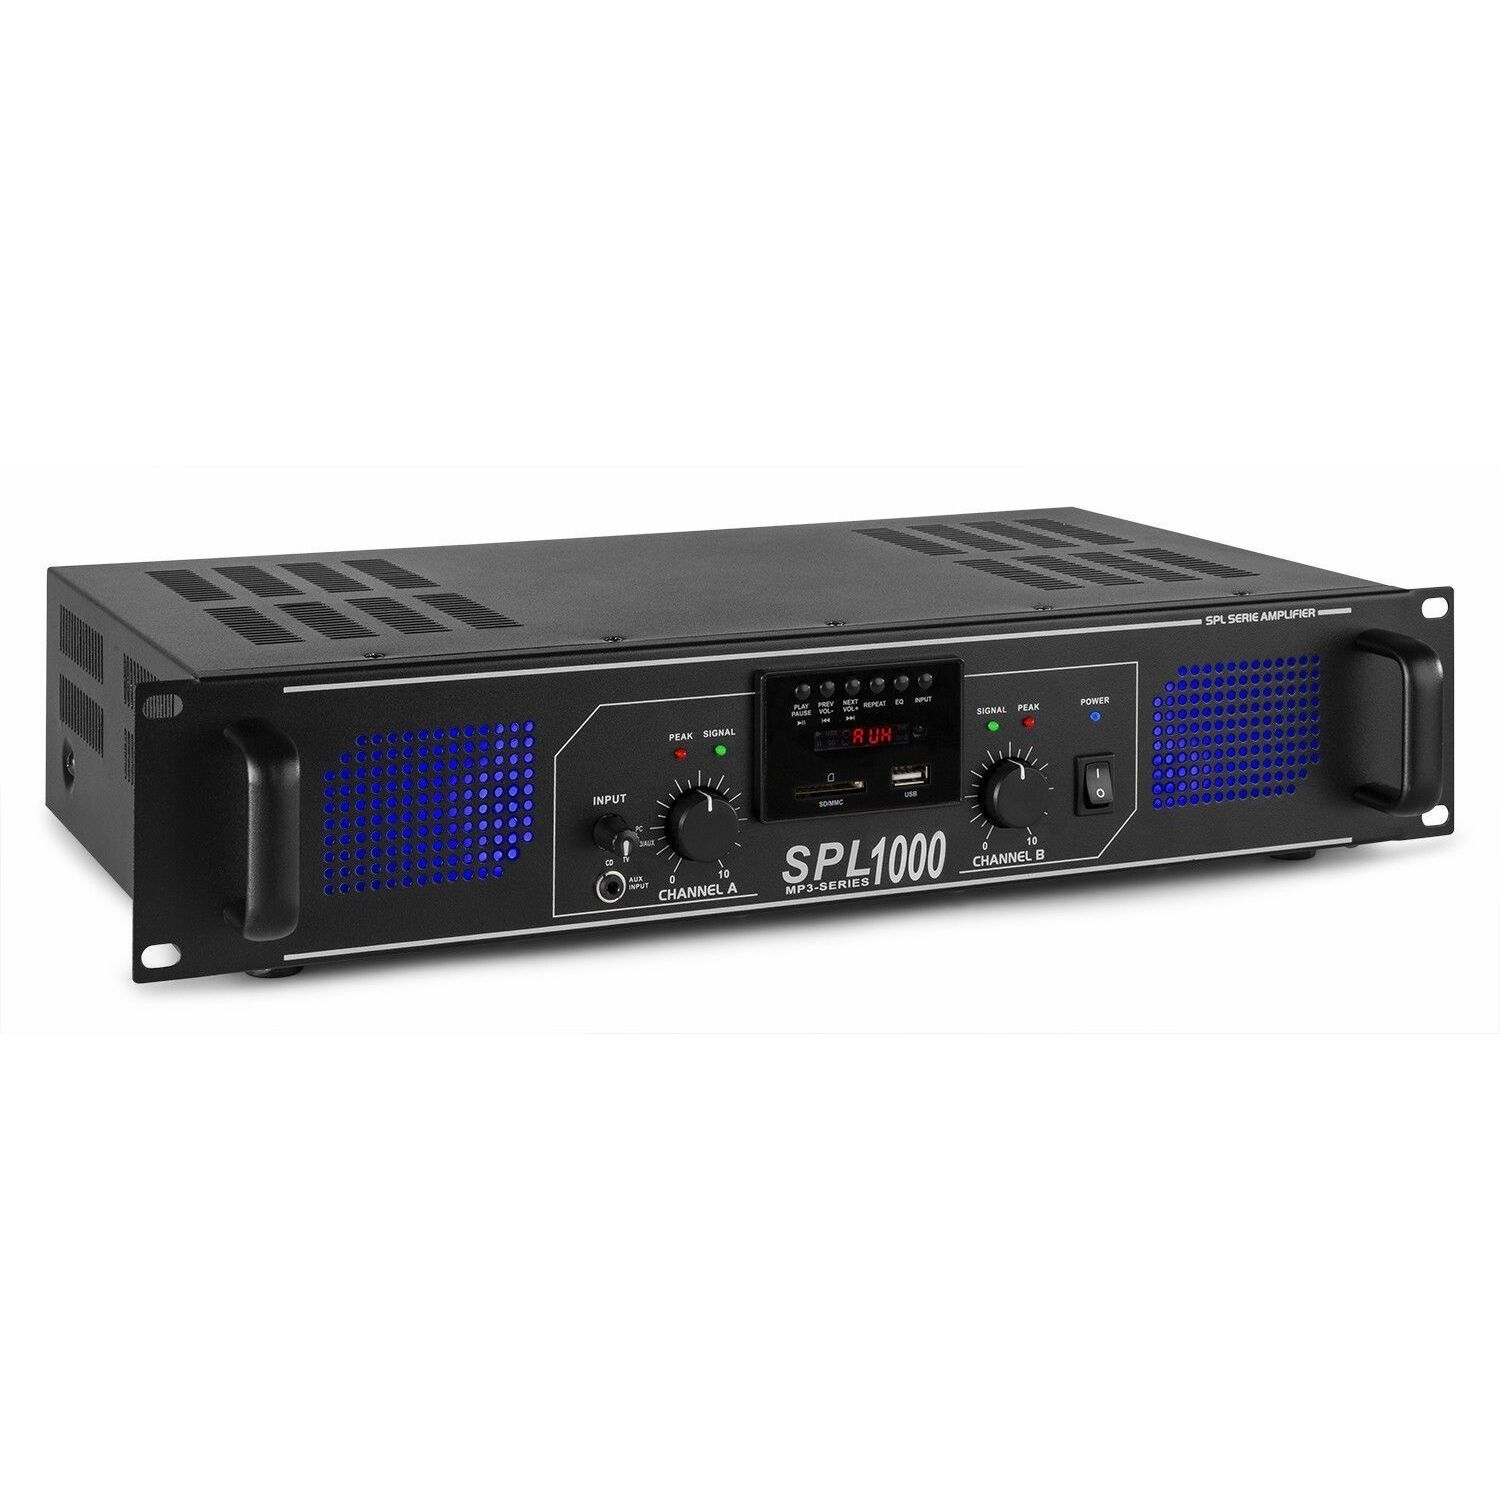 Skytec SPL1000MP3 stereo DJ versterker met ingebouwde USB MP3 speler - 2x 500W